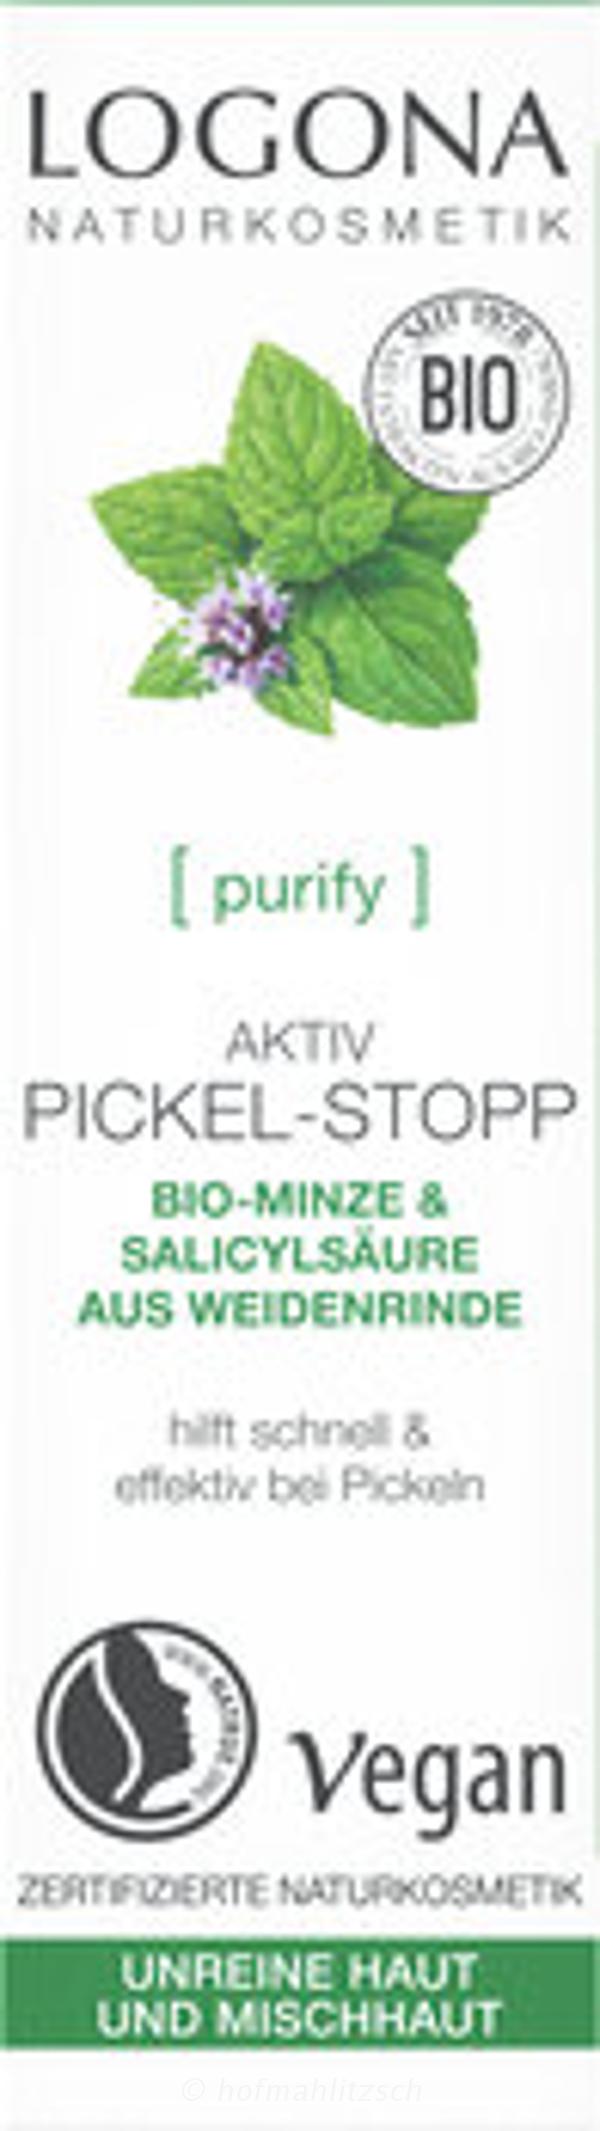 Produktfoto zu Anti-Pickel Tupfer Bio-Minze